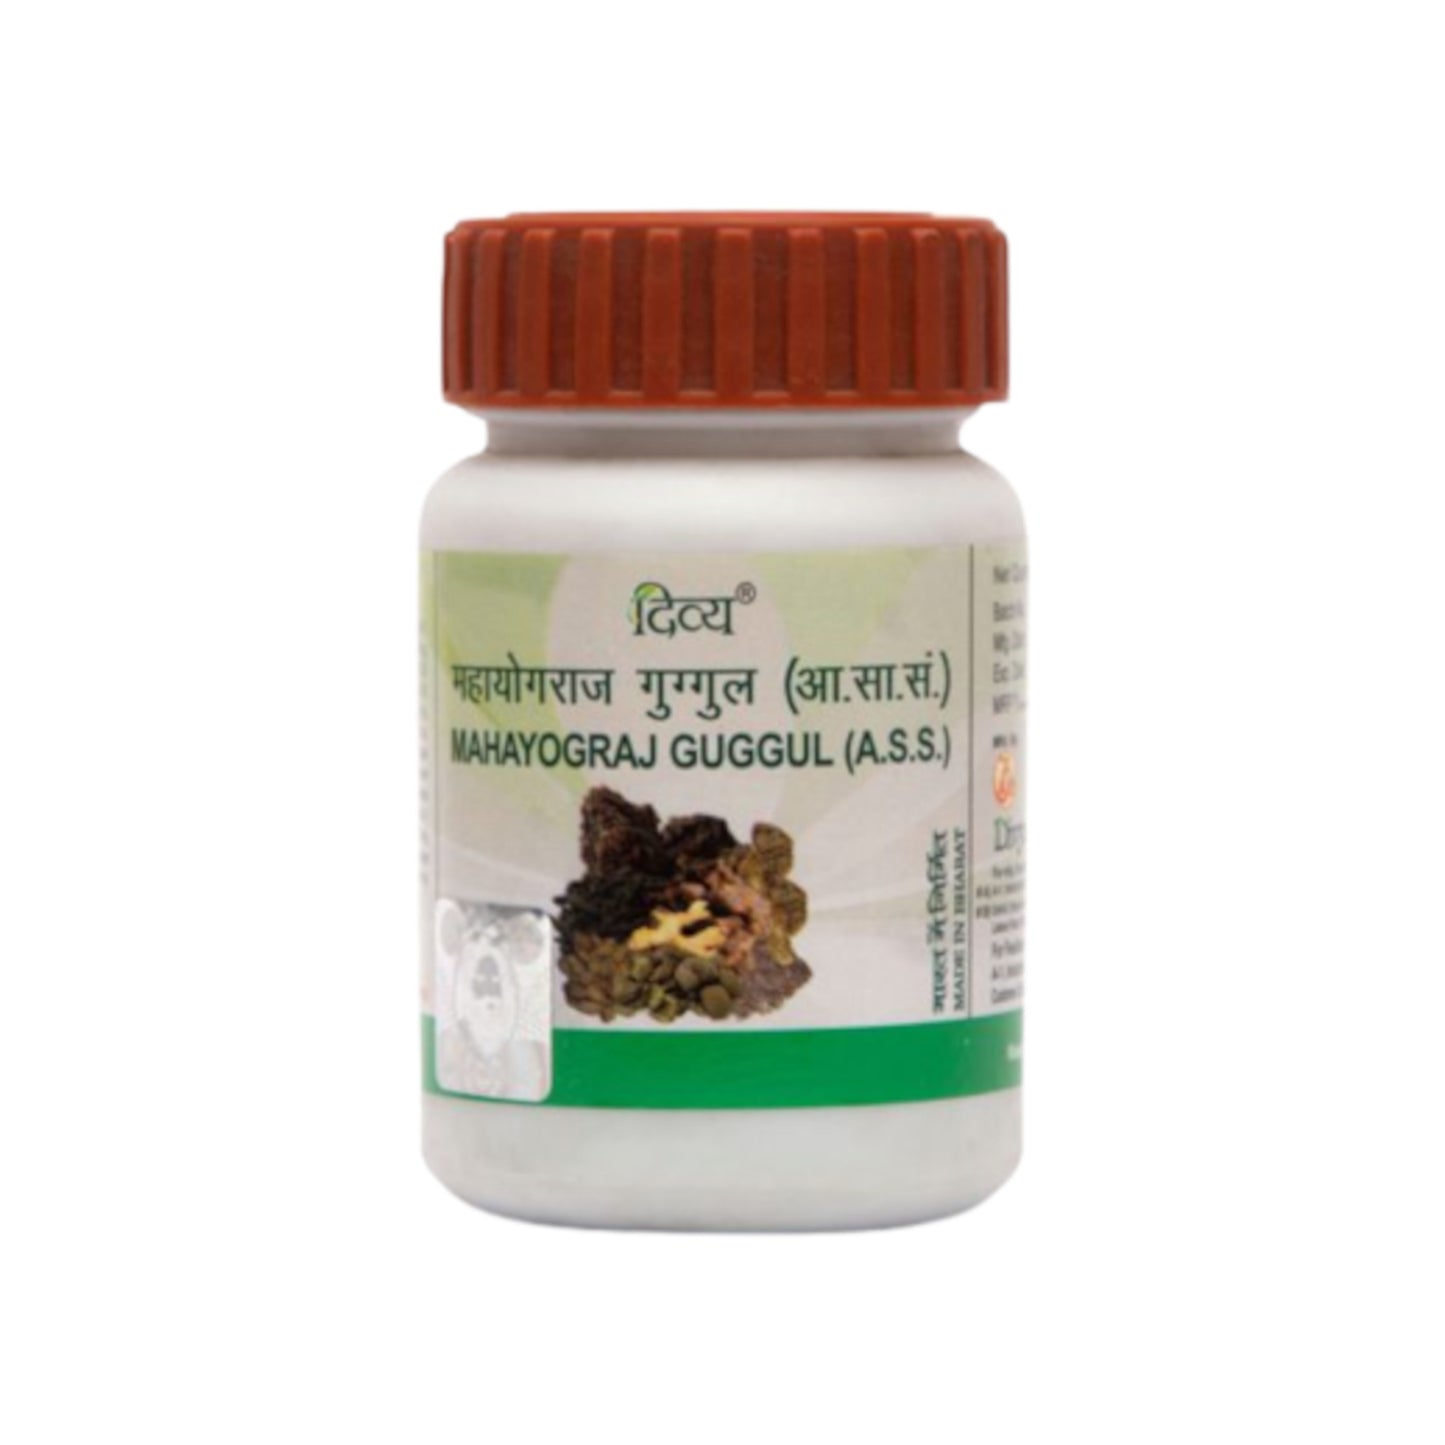 Image for Divya Patanjali Mahayograj Guggul 60 Tablets: Ayurvedic remedy for joint health and digestion.